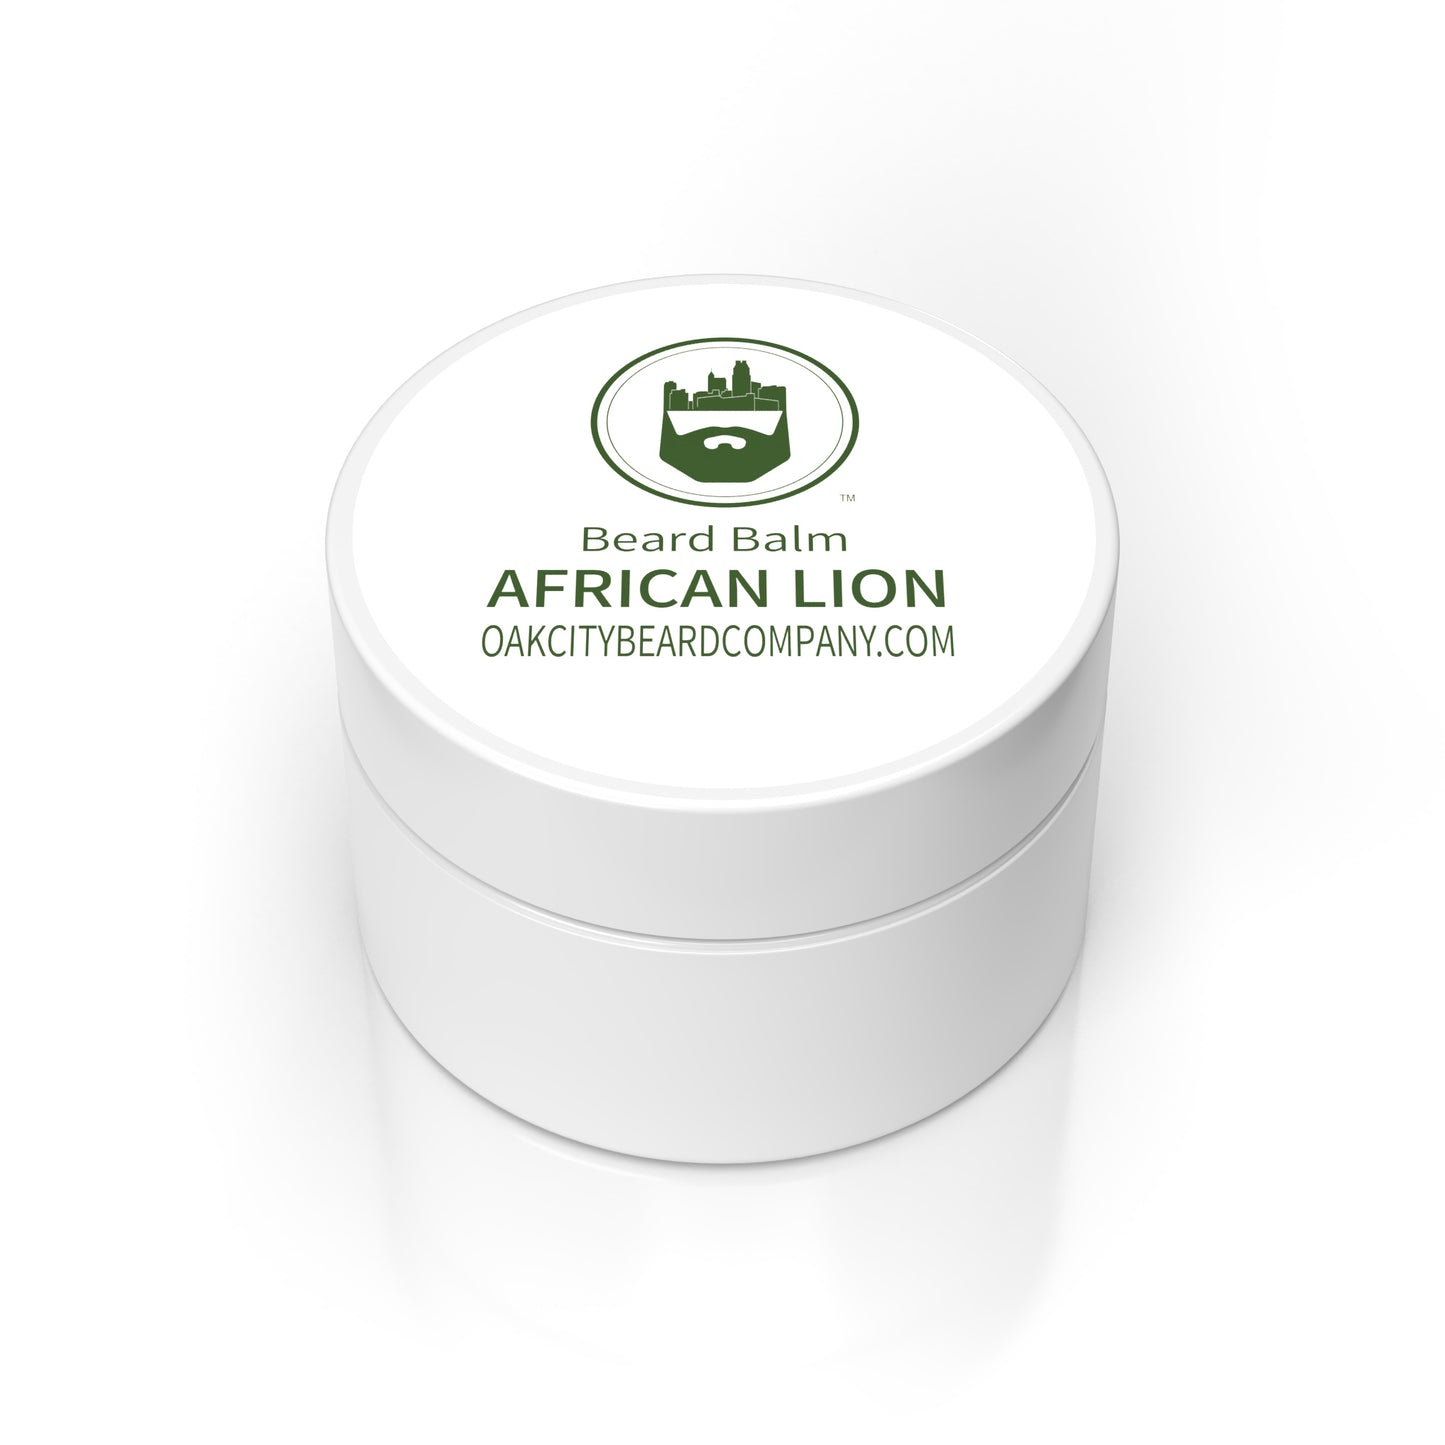 African Lion (Beard Balm) by Oak City Beard Company